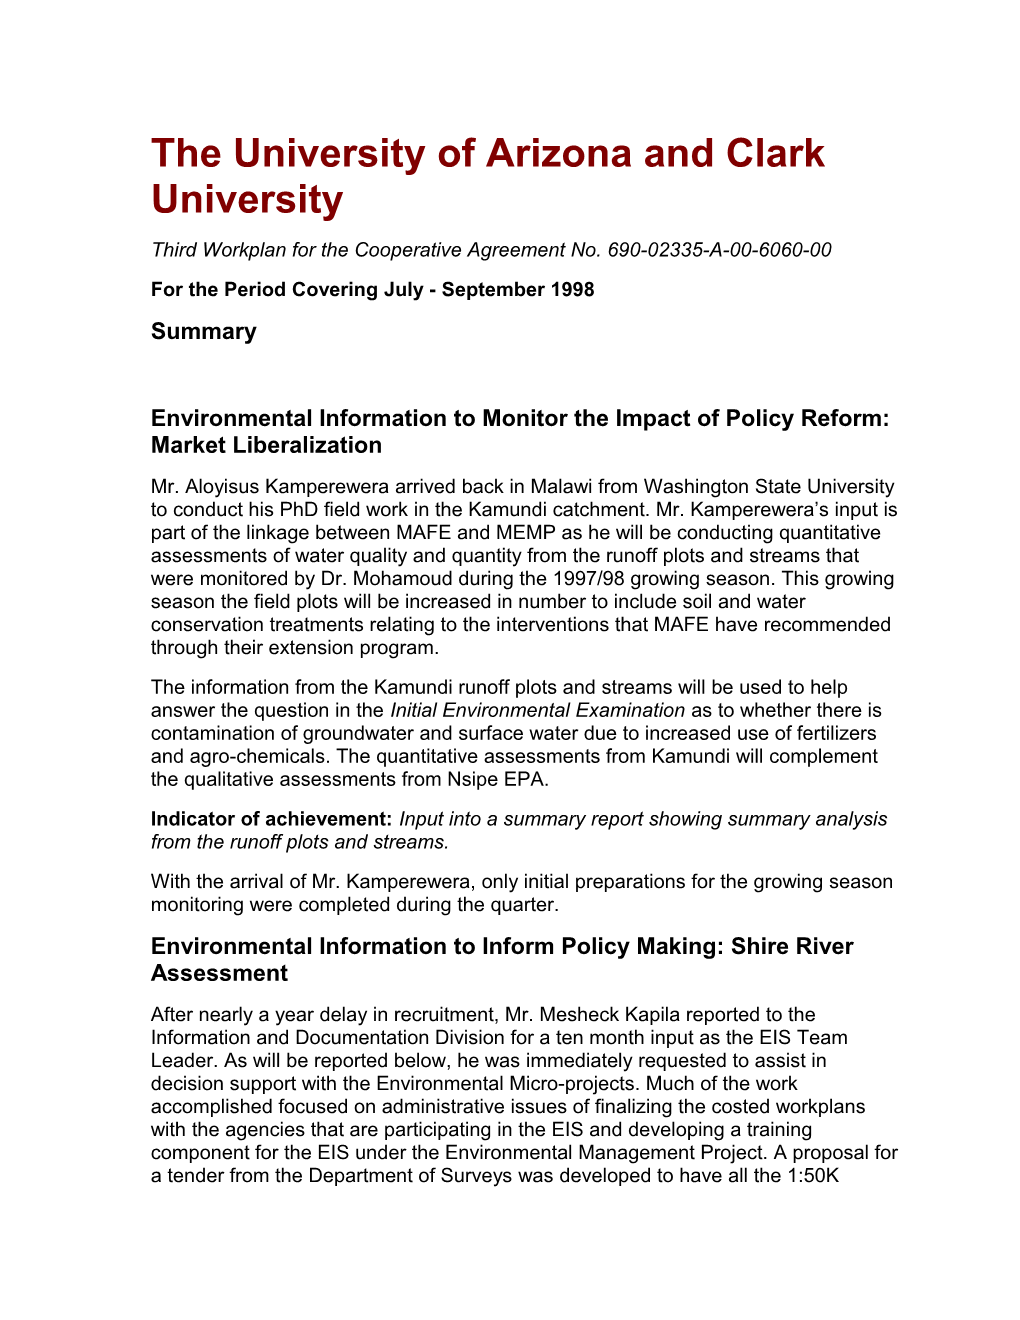 The University of Arizona and Clark University